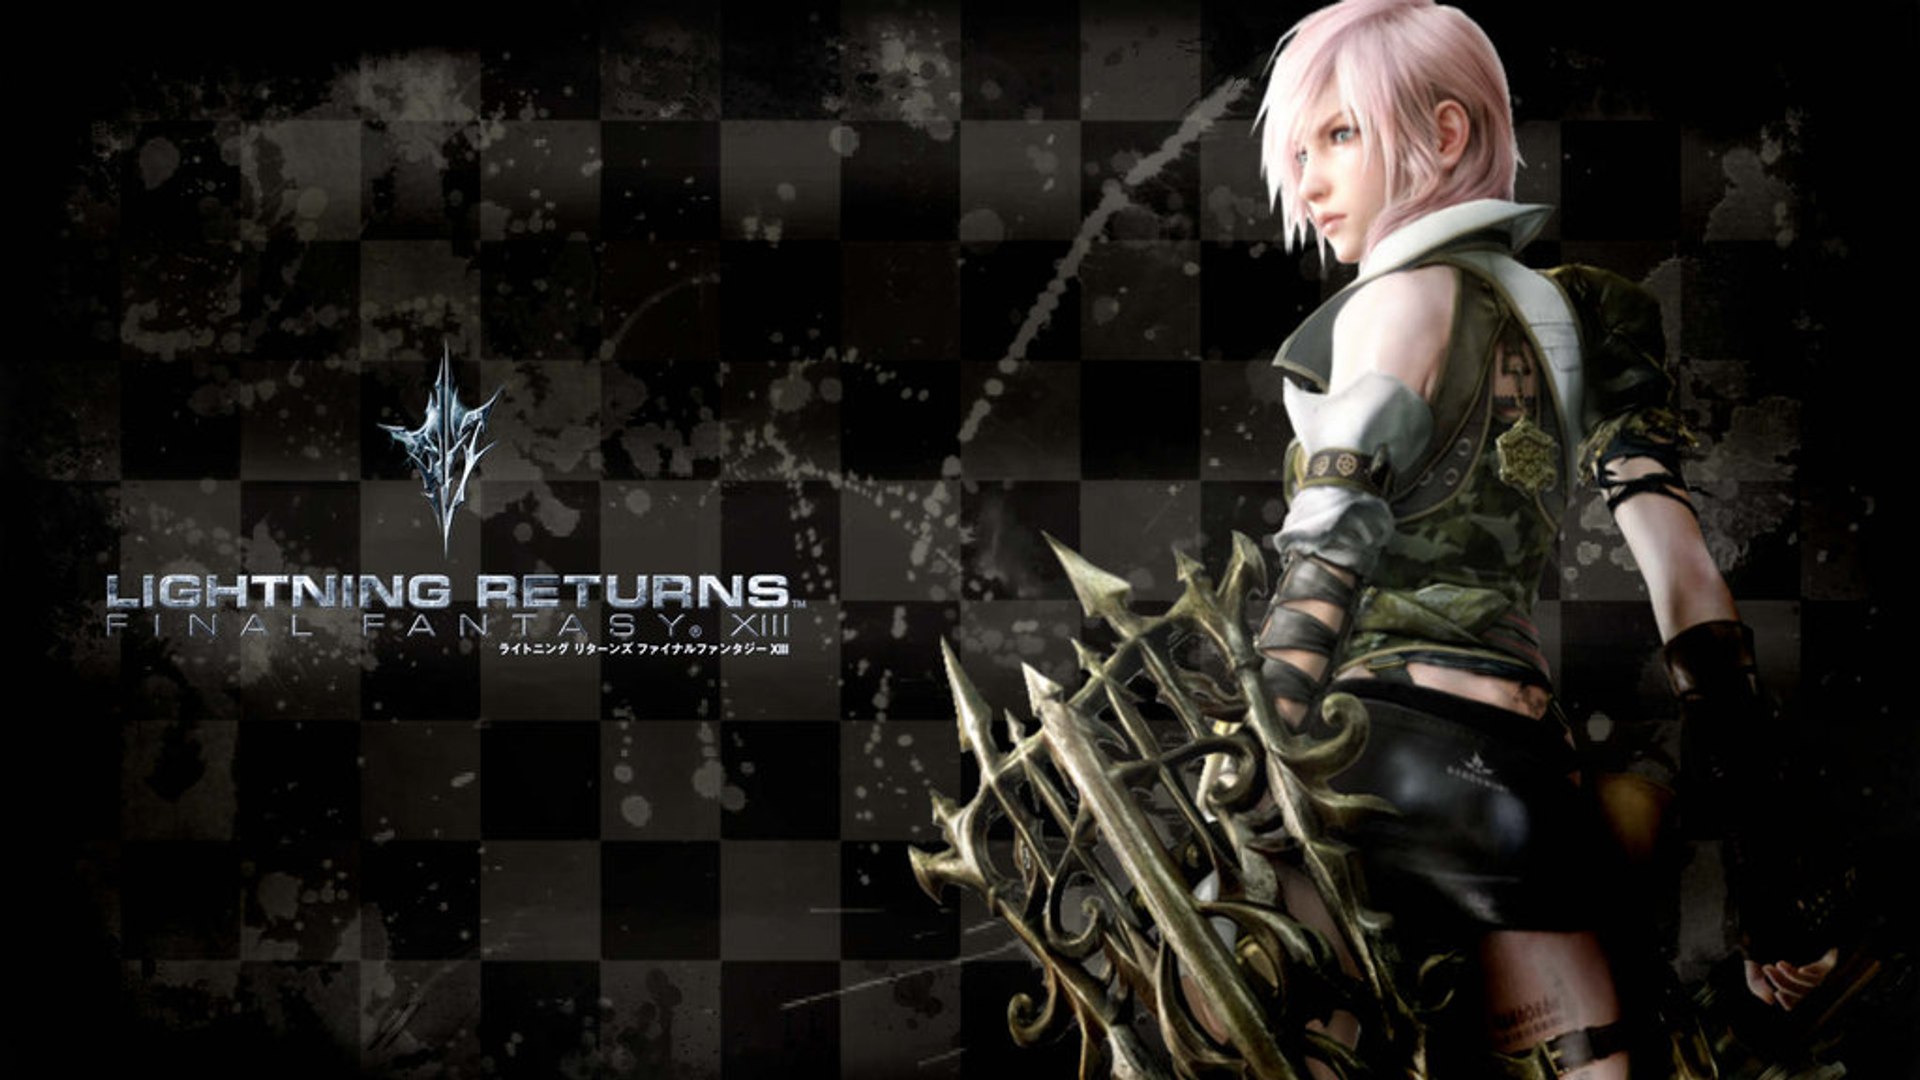 Lightning Returns Final Fantasy Xiii Ps3 Playthrough Part 1 Hd Video Dailymotion